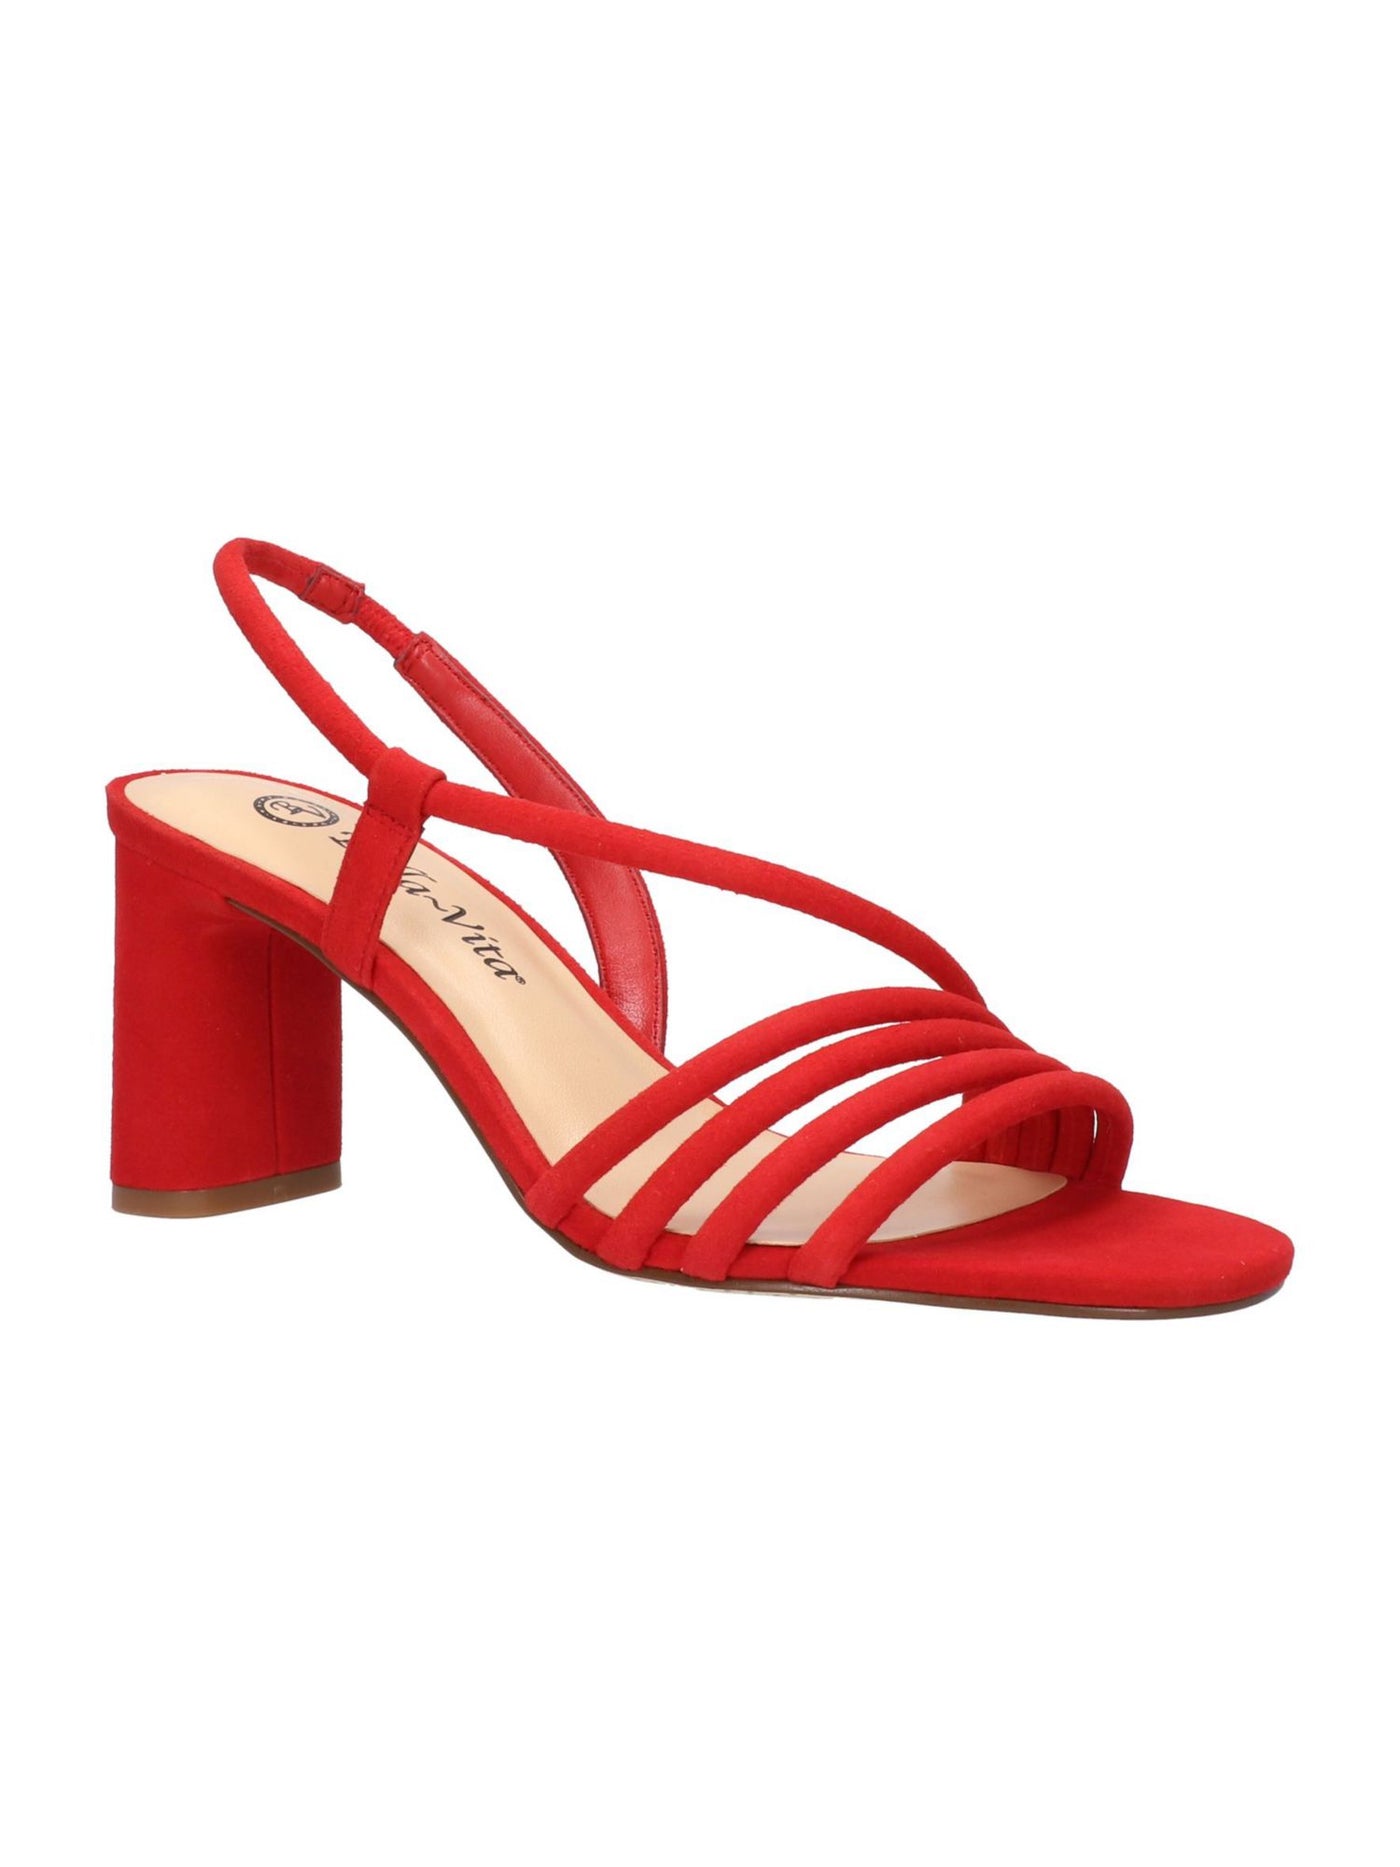 BELLA VITA Womens Red Elastic Goring Asymmetrical Cushioned Strappy Zariah Round Toe Block Heel Slip On Leather Slingback Sandal 6 M